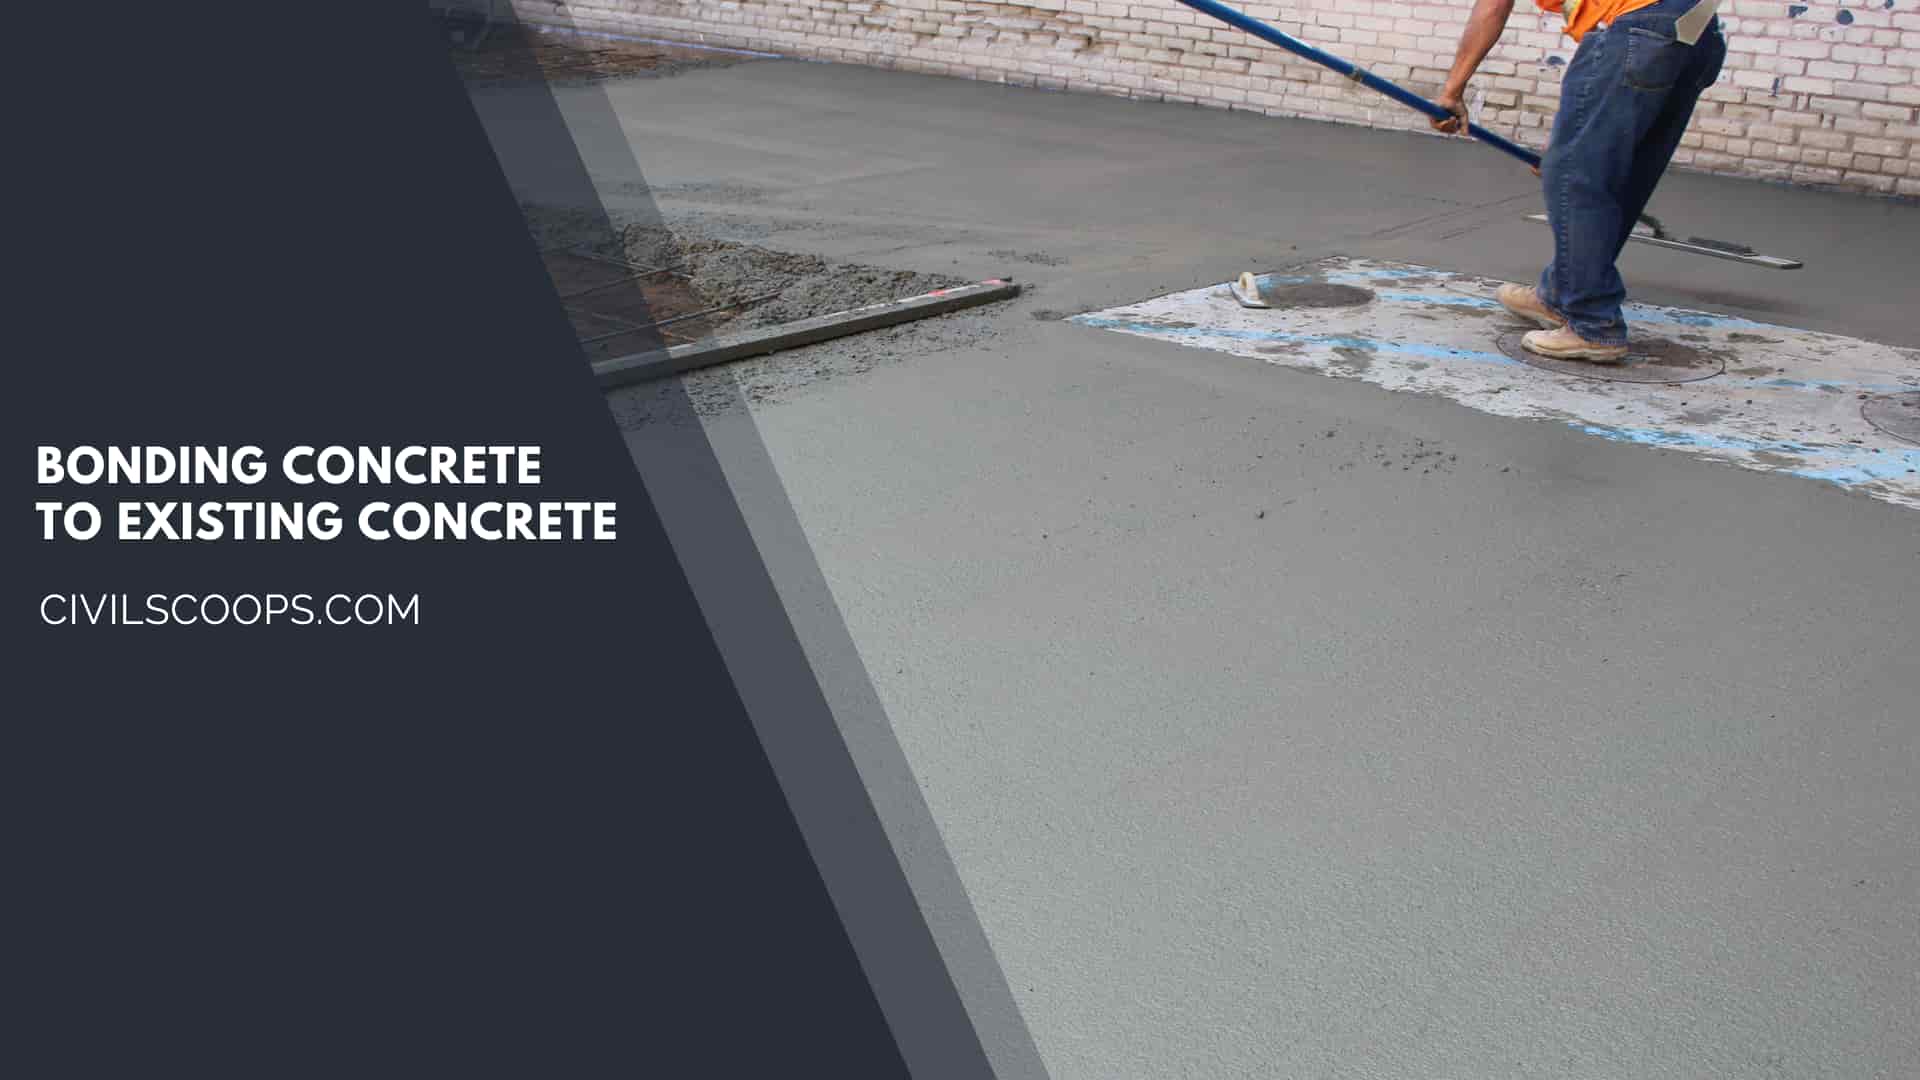 Bonding Concrete to Existing Concrete